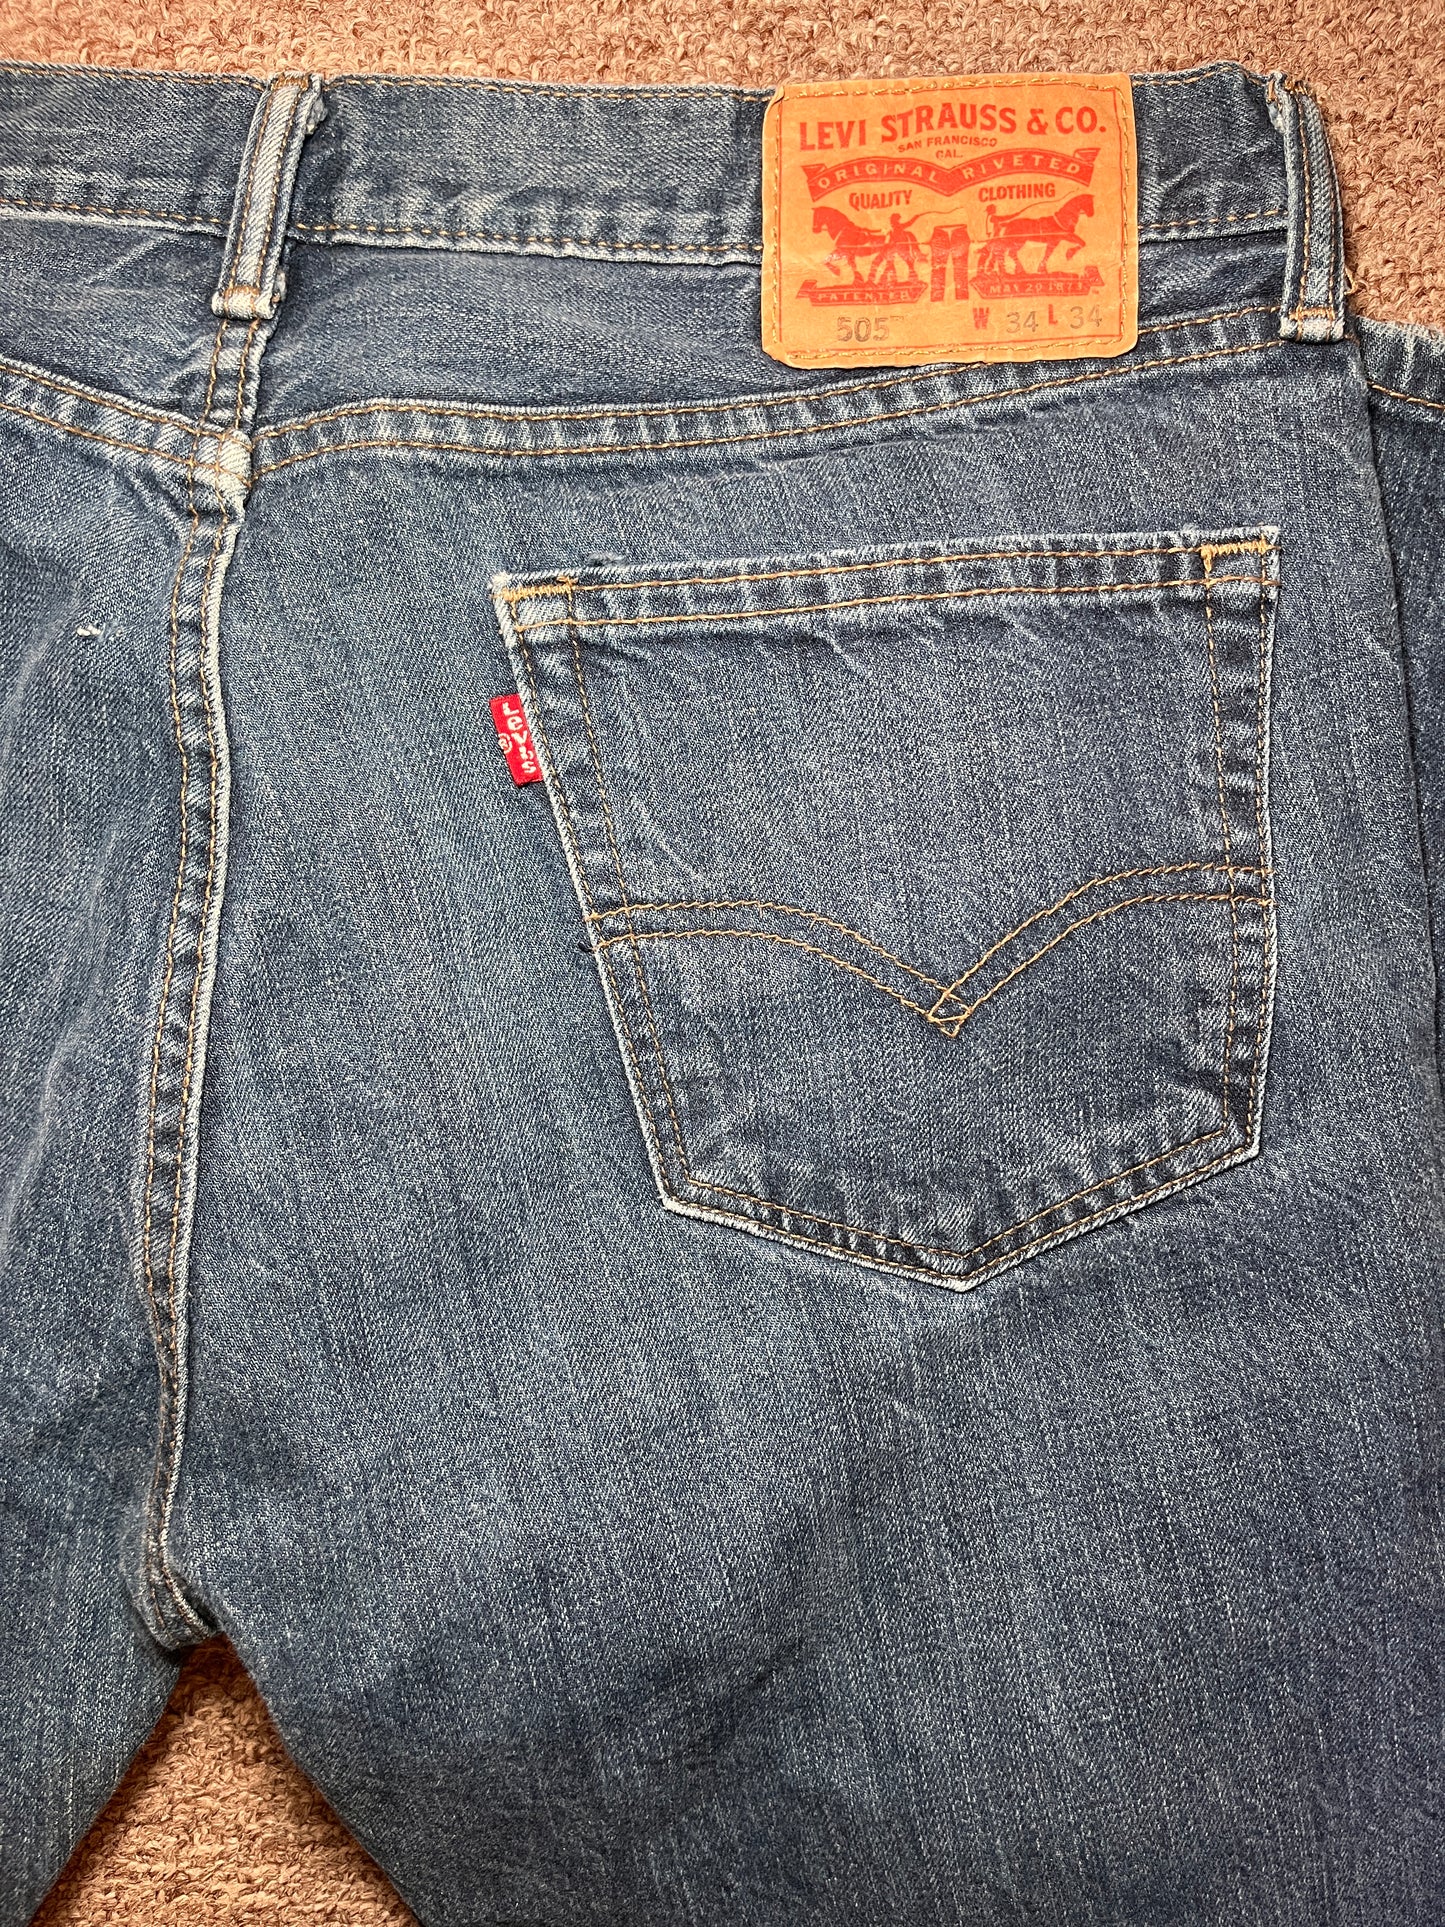 Levi's 505 Jeans Mens 34x34 Regular Straight Blue Denim Wash Cotton Work Pants